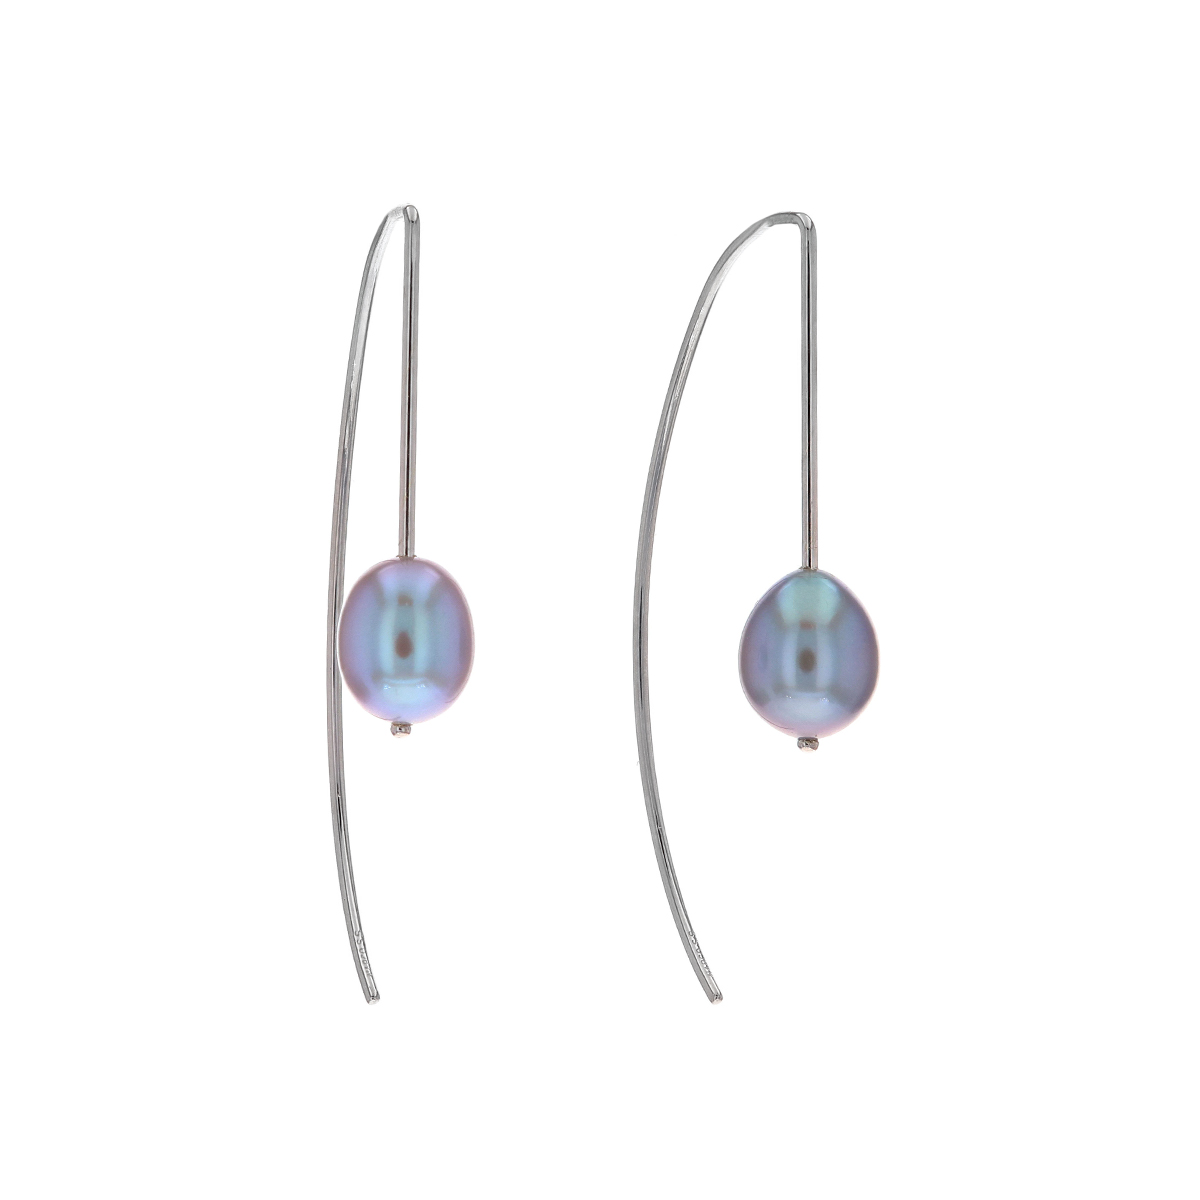 Sterling Silver Gray Freshwater Pearl Earrings